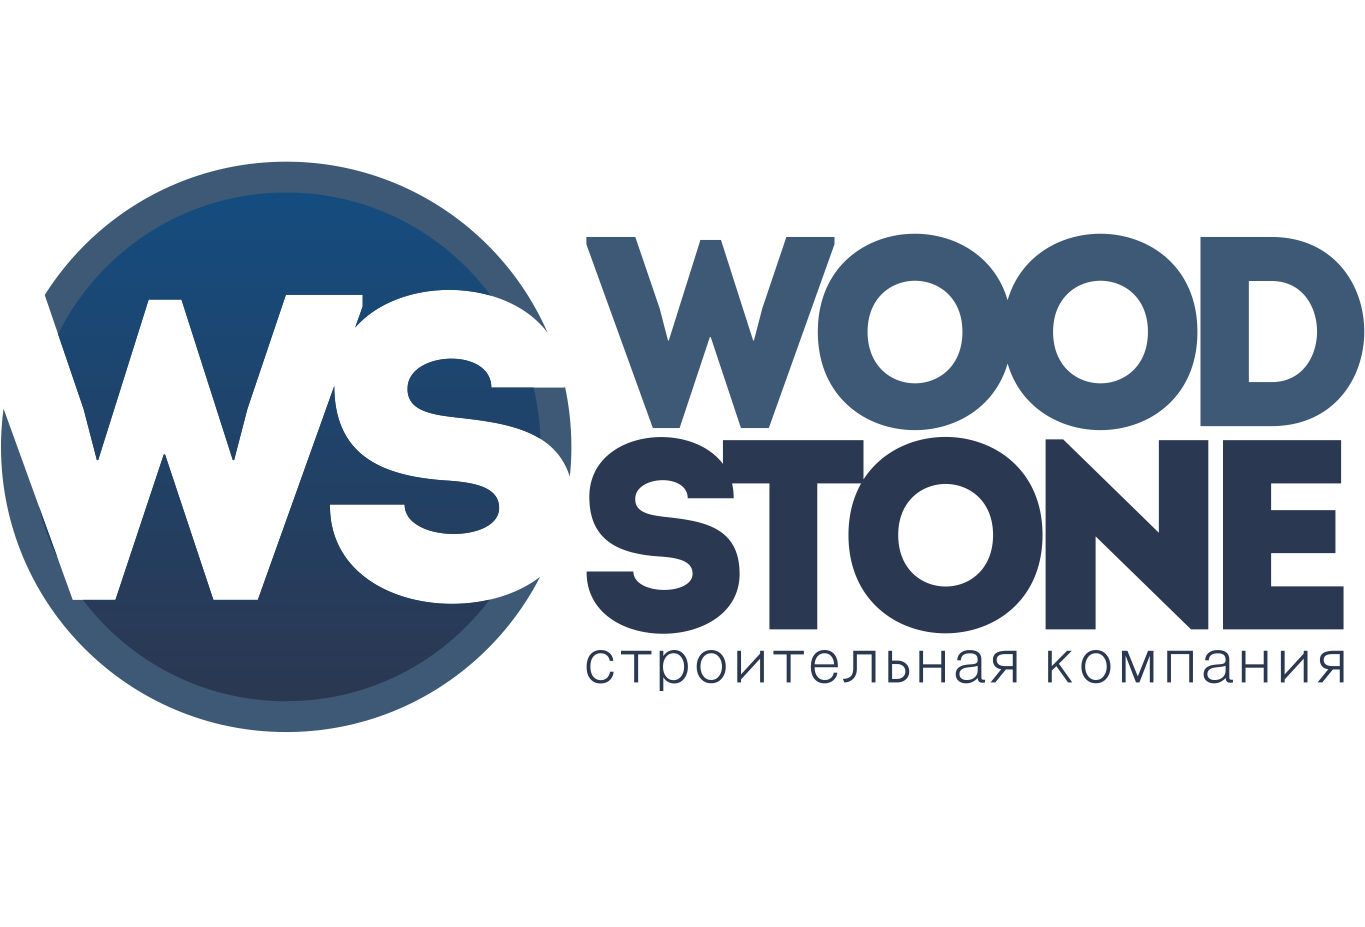 Woodstone логотип. Stone строительная компания. Строительная компания Стоун логотип. Вудстоун клик Целлюлоза. Стоун строительная